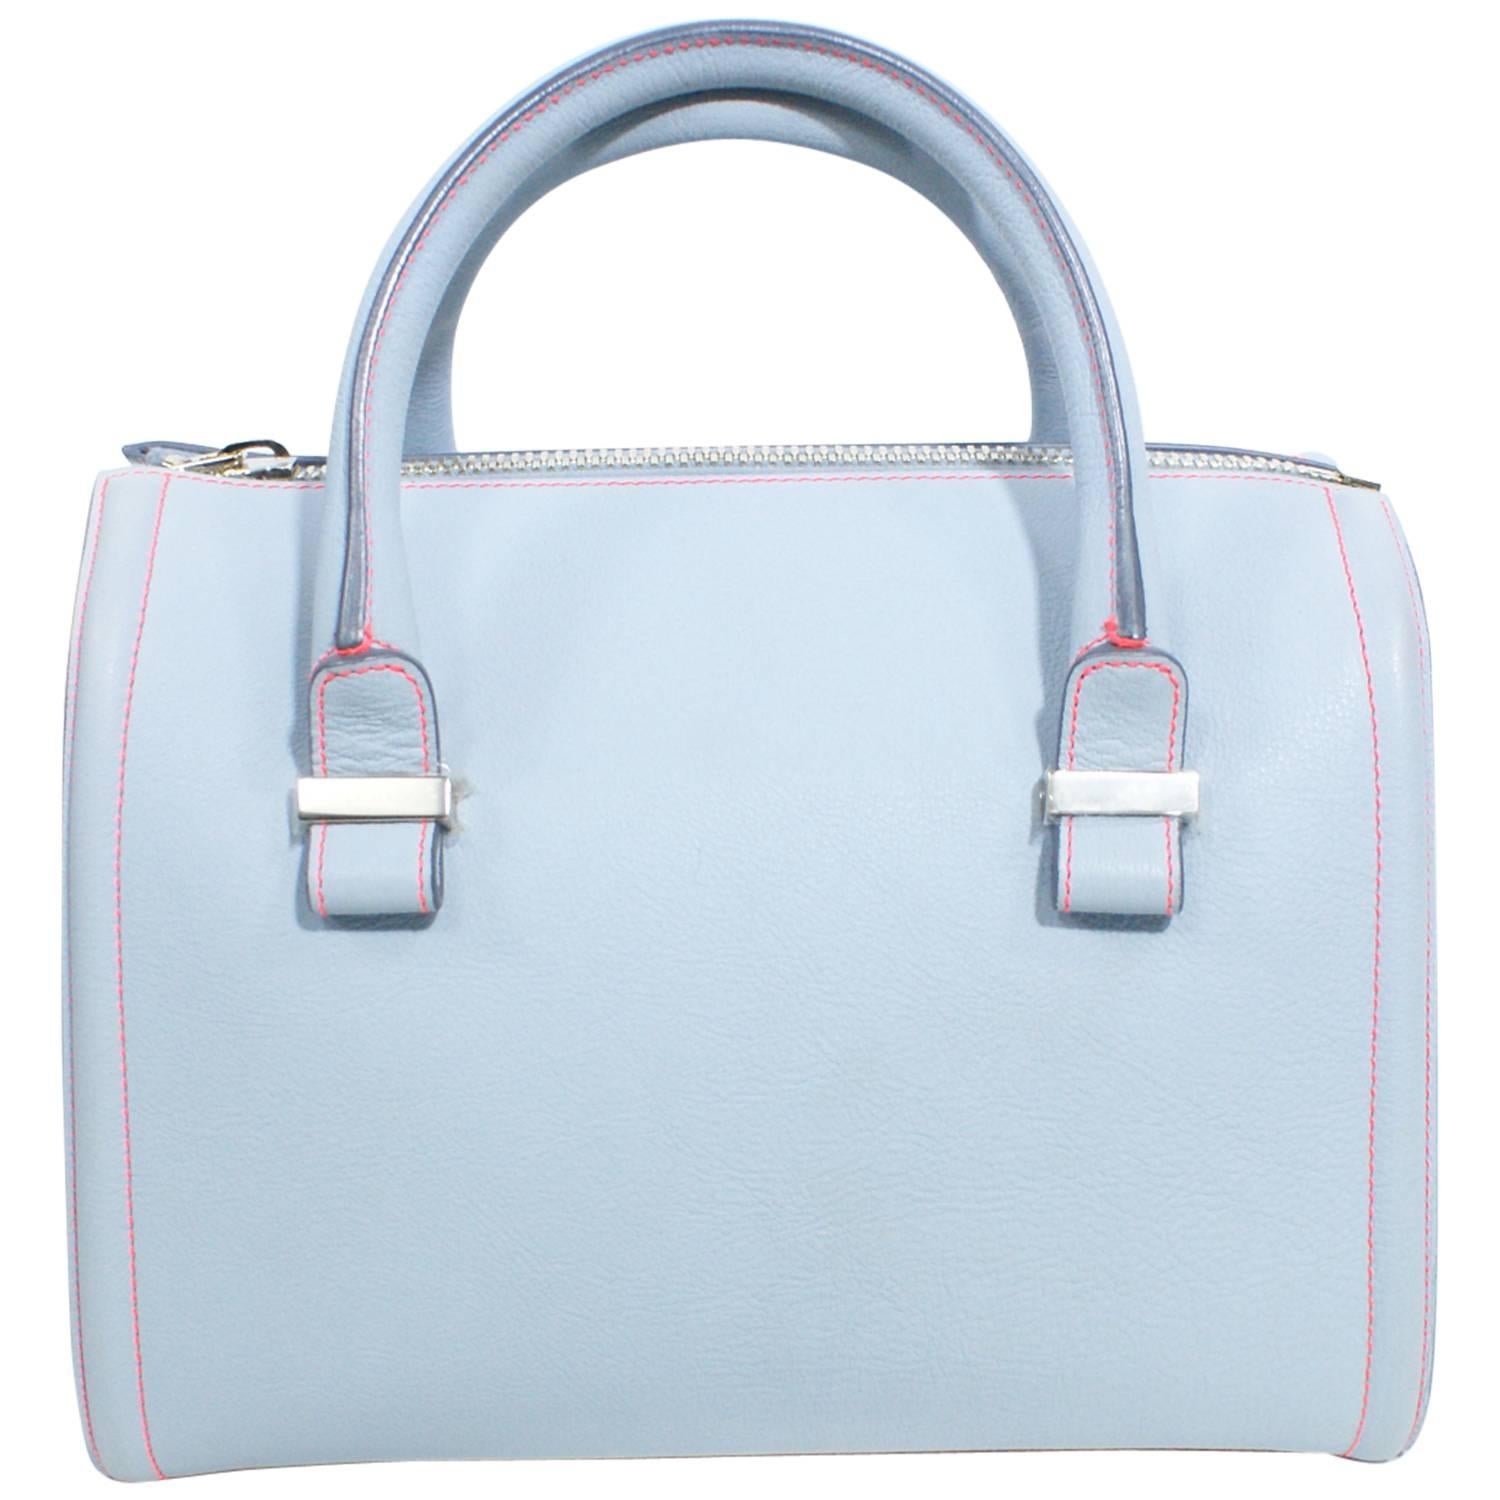 Victoria Beckham Light Blue Tote Handbag  For Sale